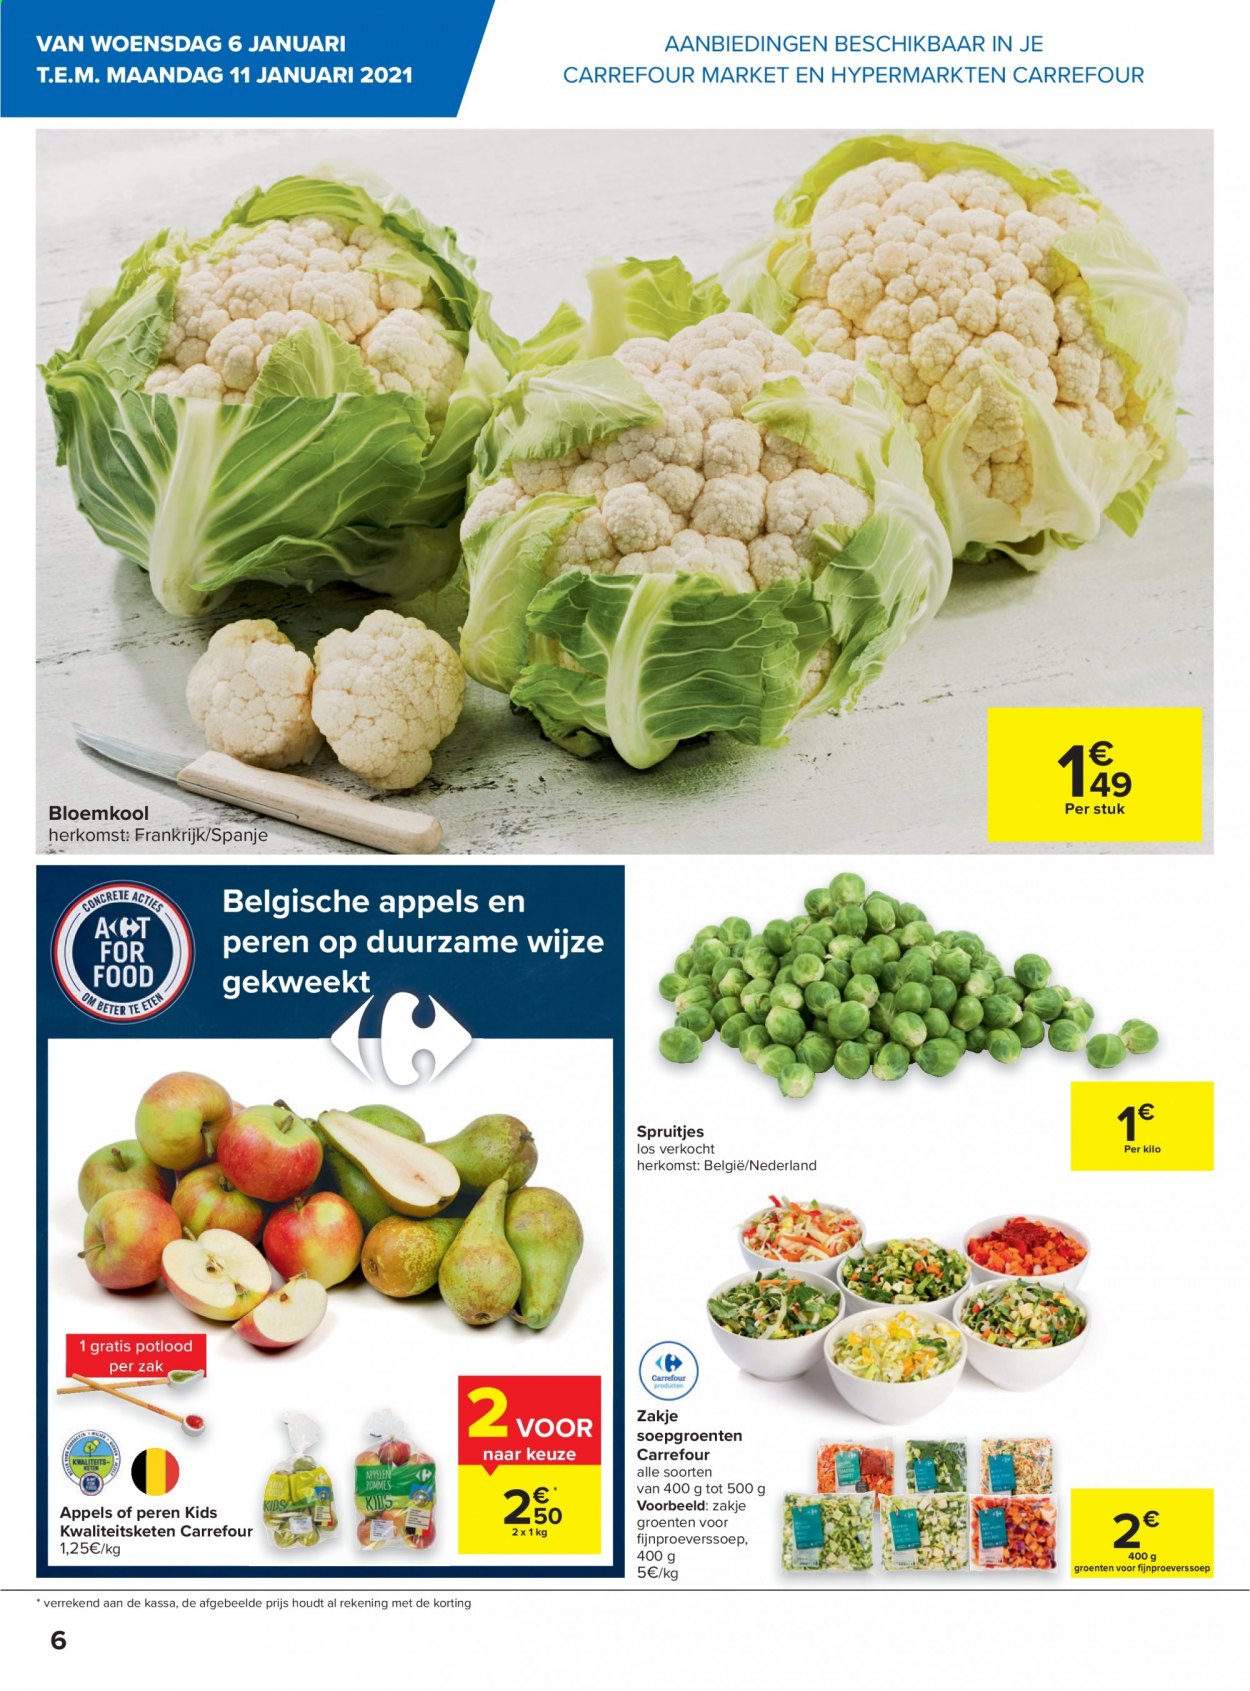 thumbnail - Carrefour-aanbieding - 06/01/2021 - 11/01/2021 -  producten in de aanbieding - bloemkool, spruitjes. Pagina 6.